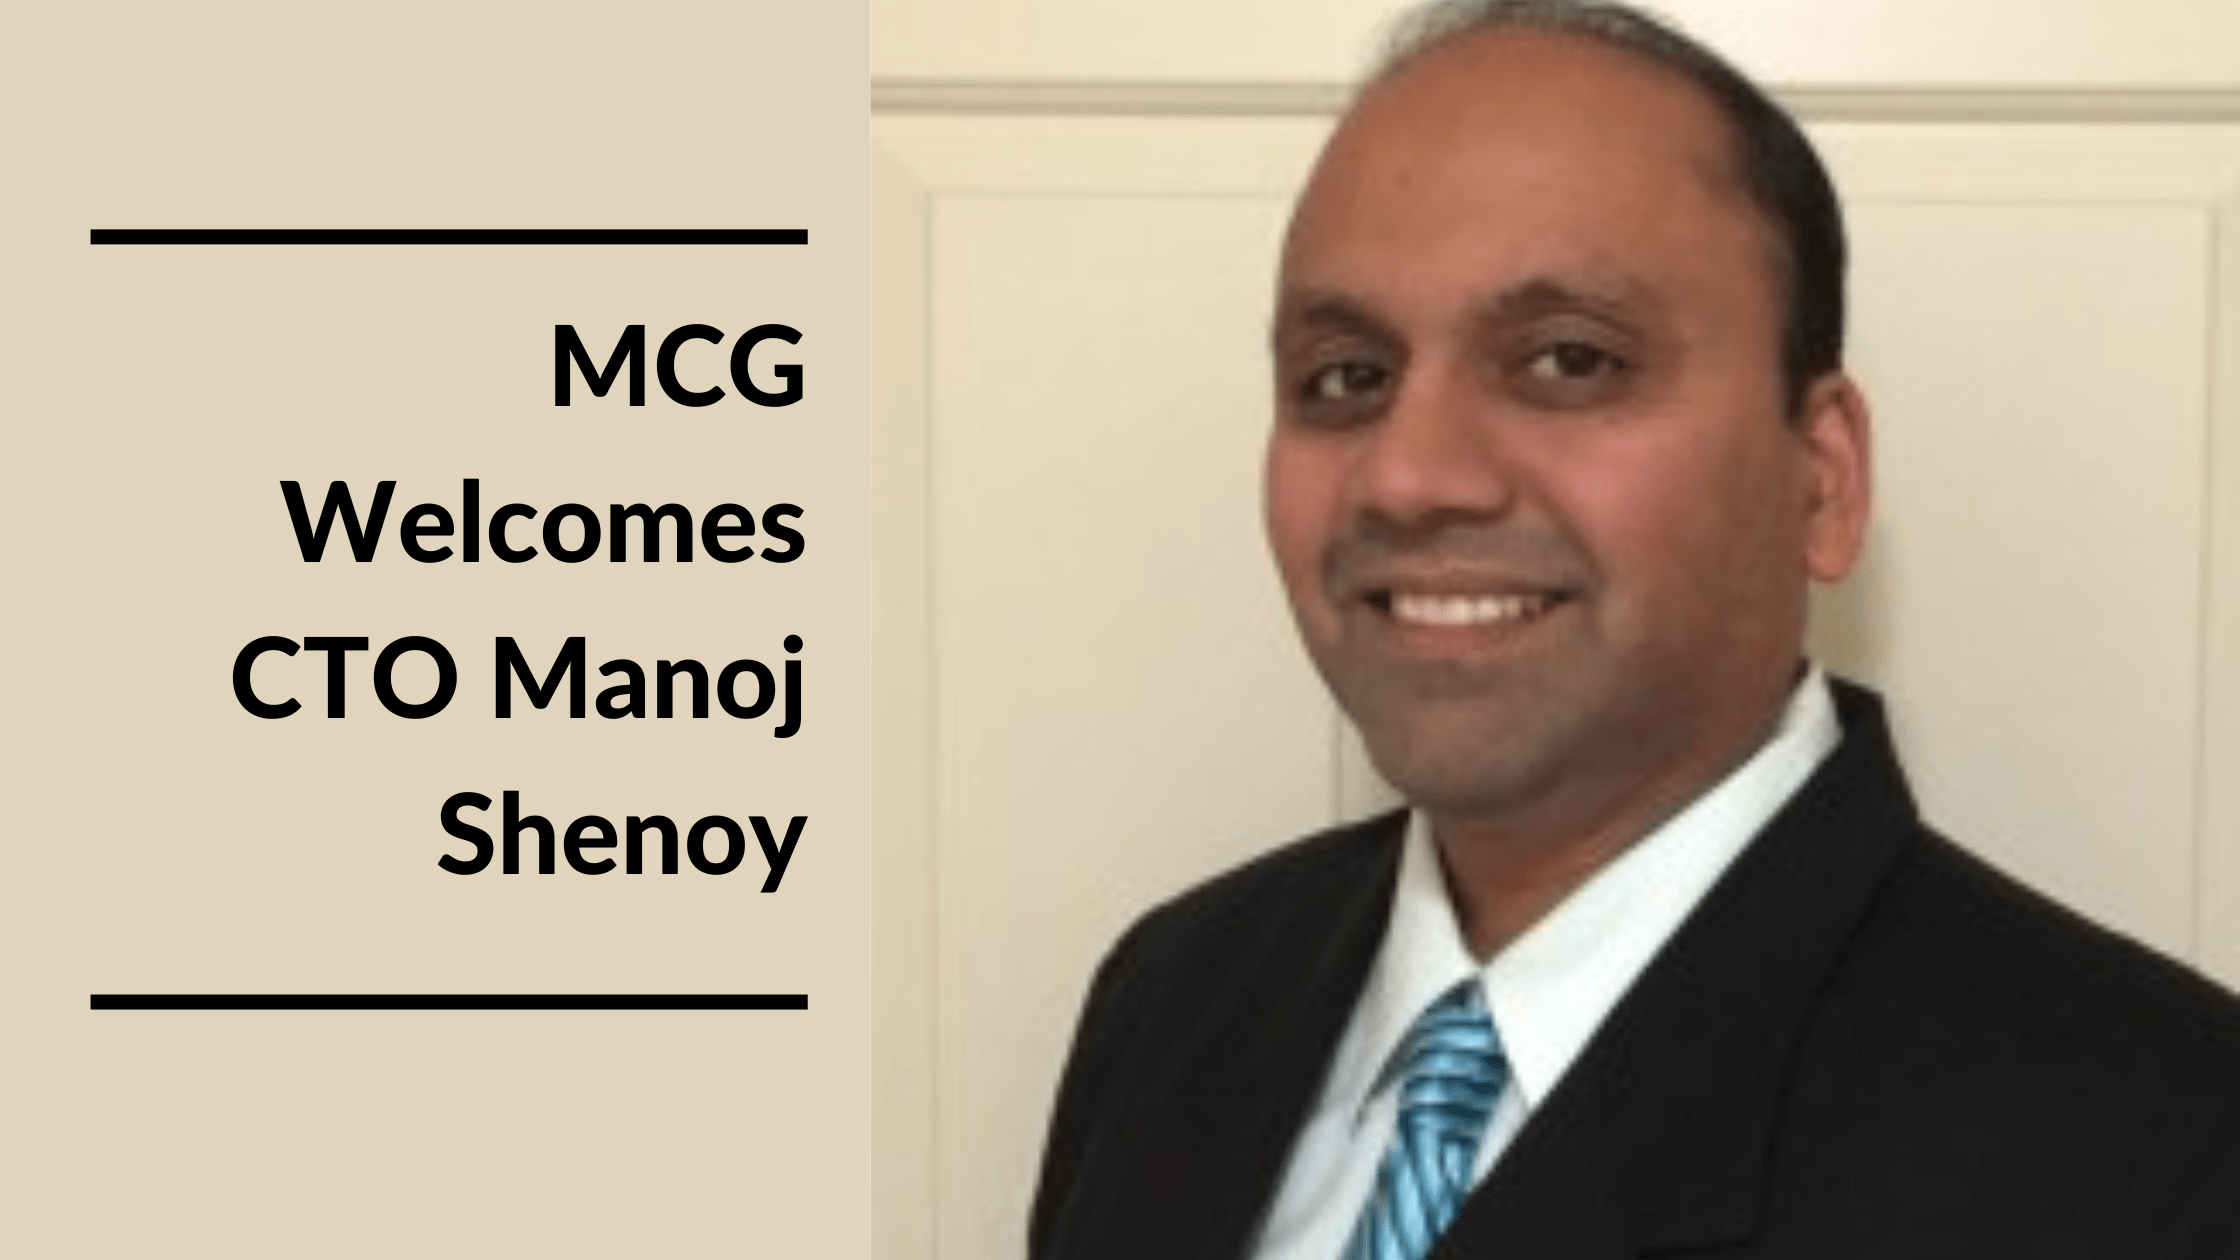 MCG Welcomes Manoj Shenoy Featured Image